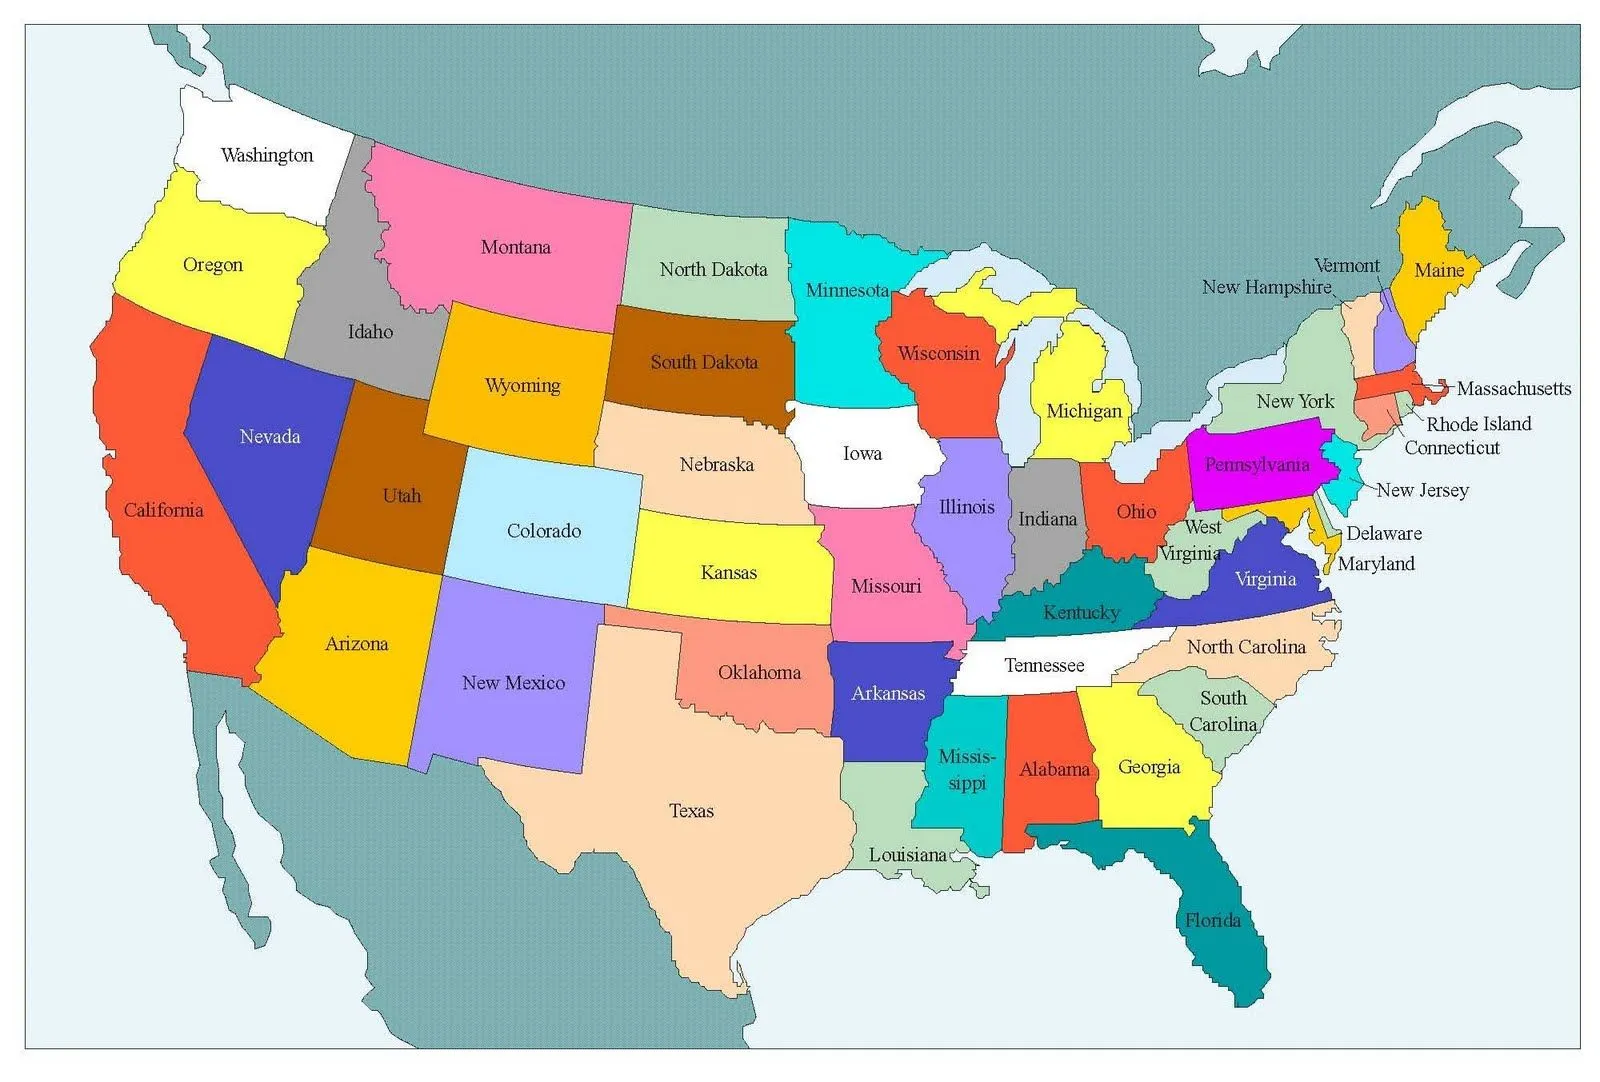 BILINGUAL AL-YUSSANA: USA MAP